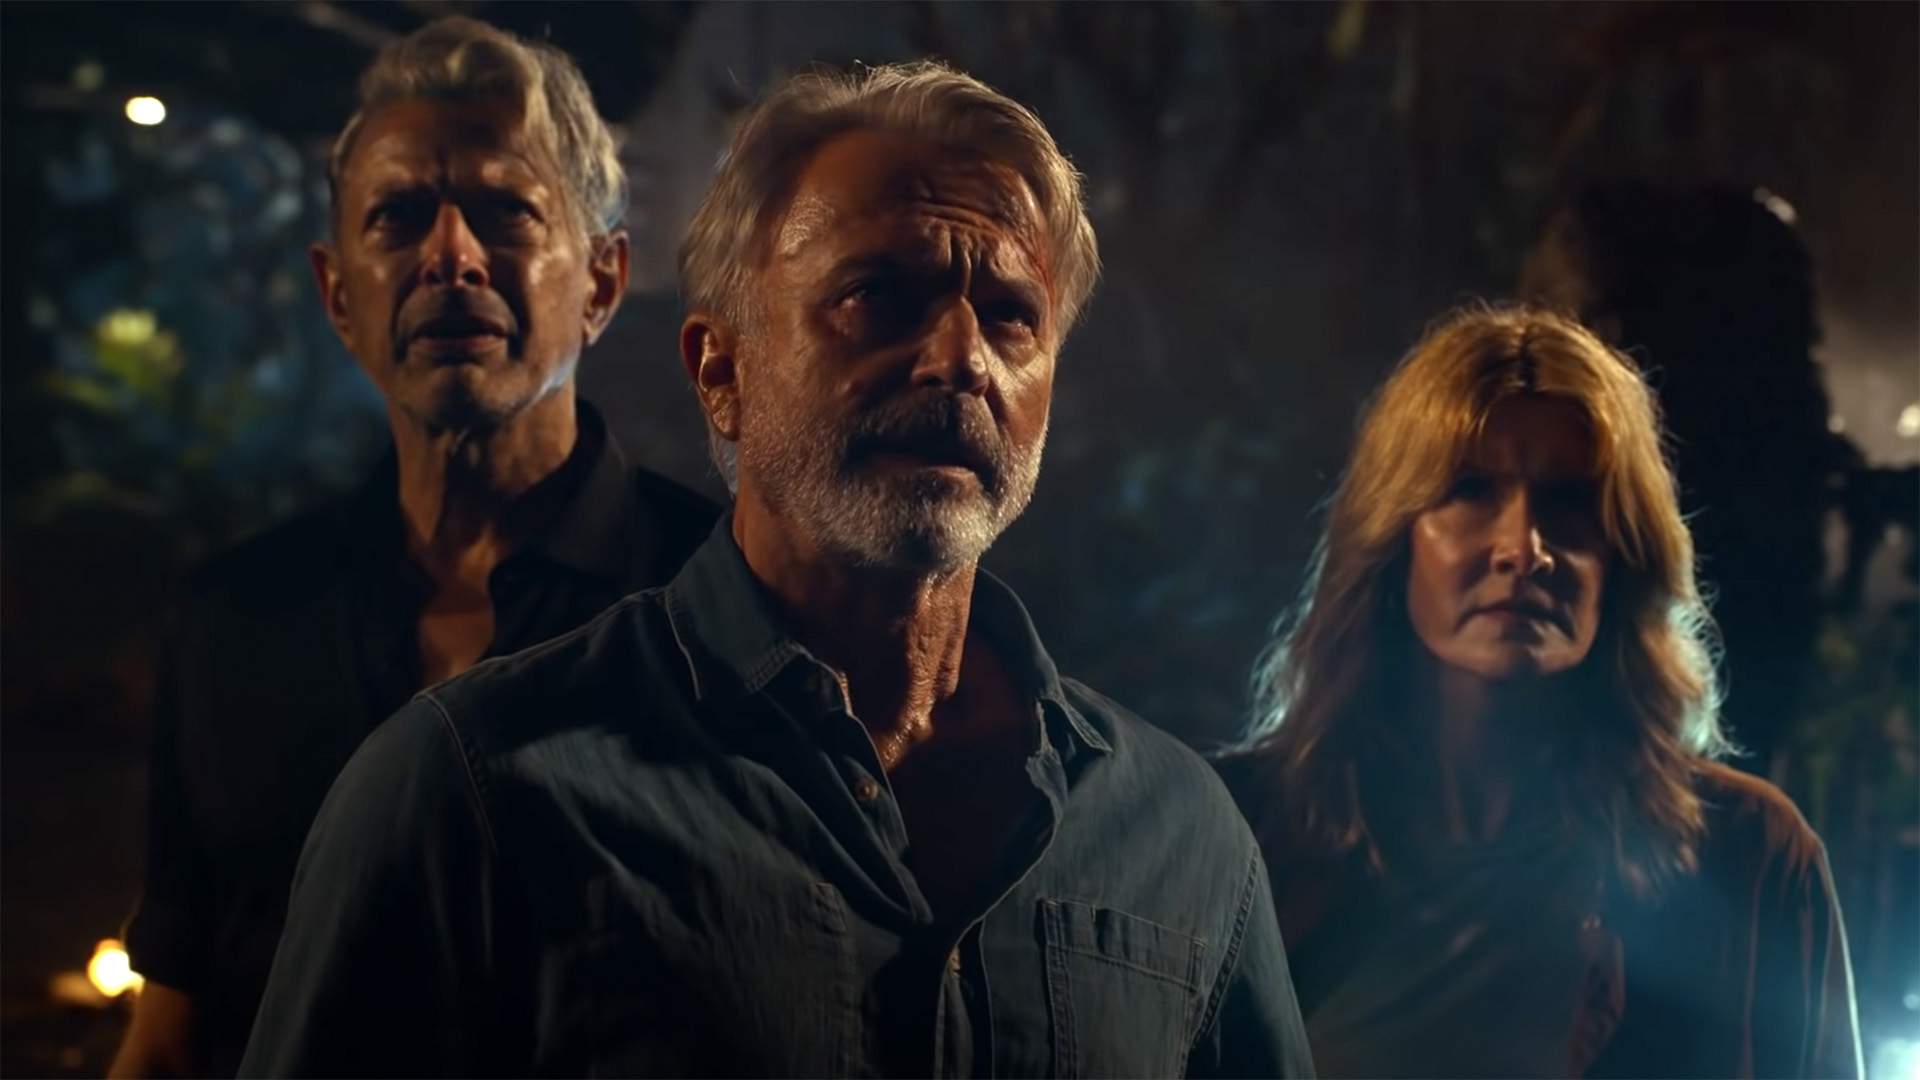 Jeff Goldblum, Laura Dern and Sam Neill Reunite in the First Trailer for 'Jurassic World Dominion'